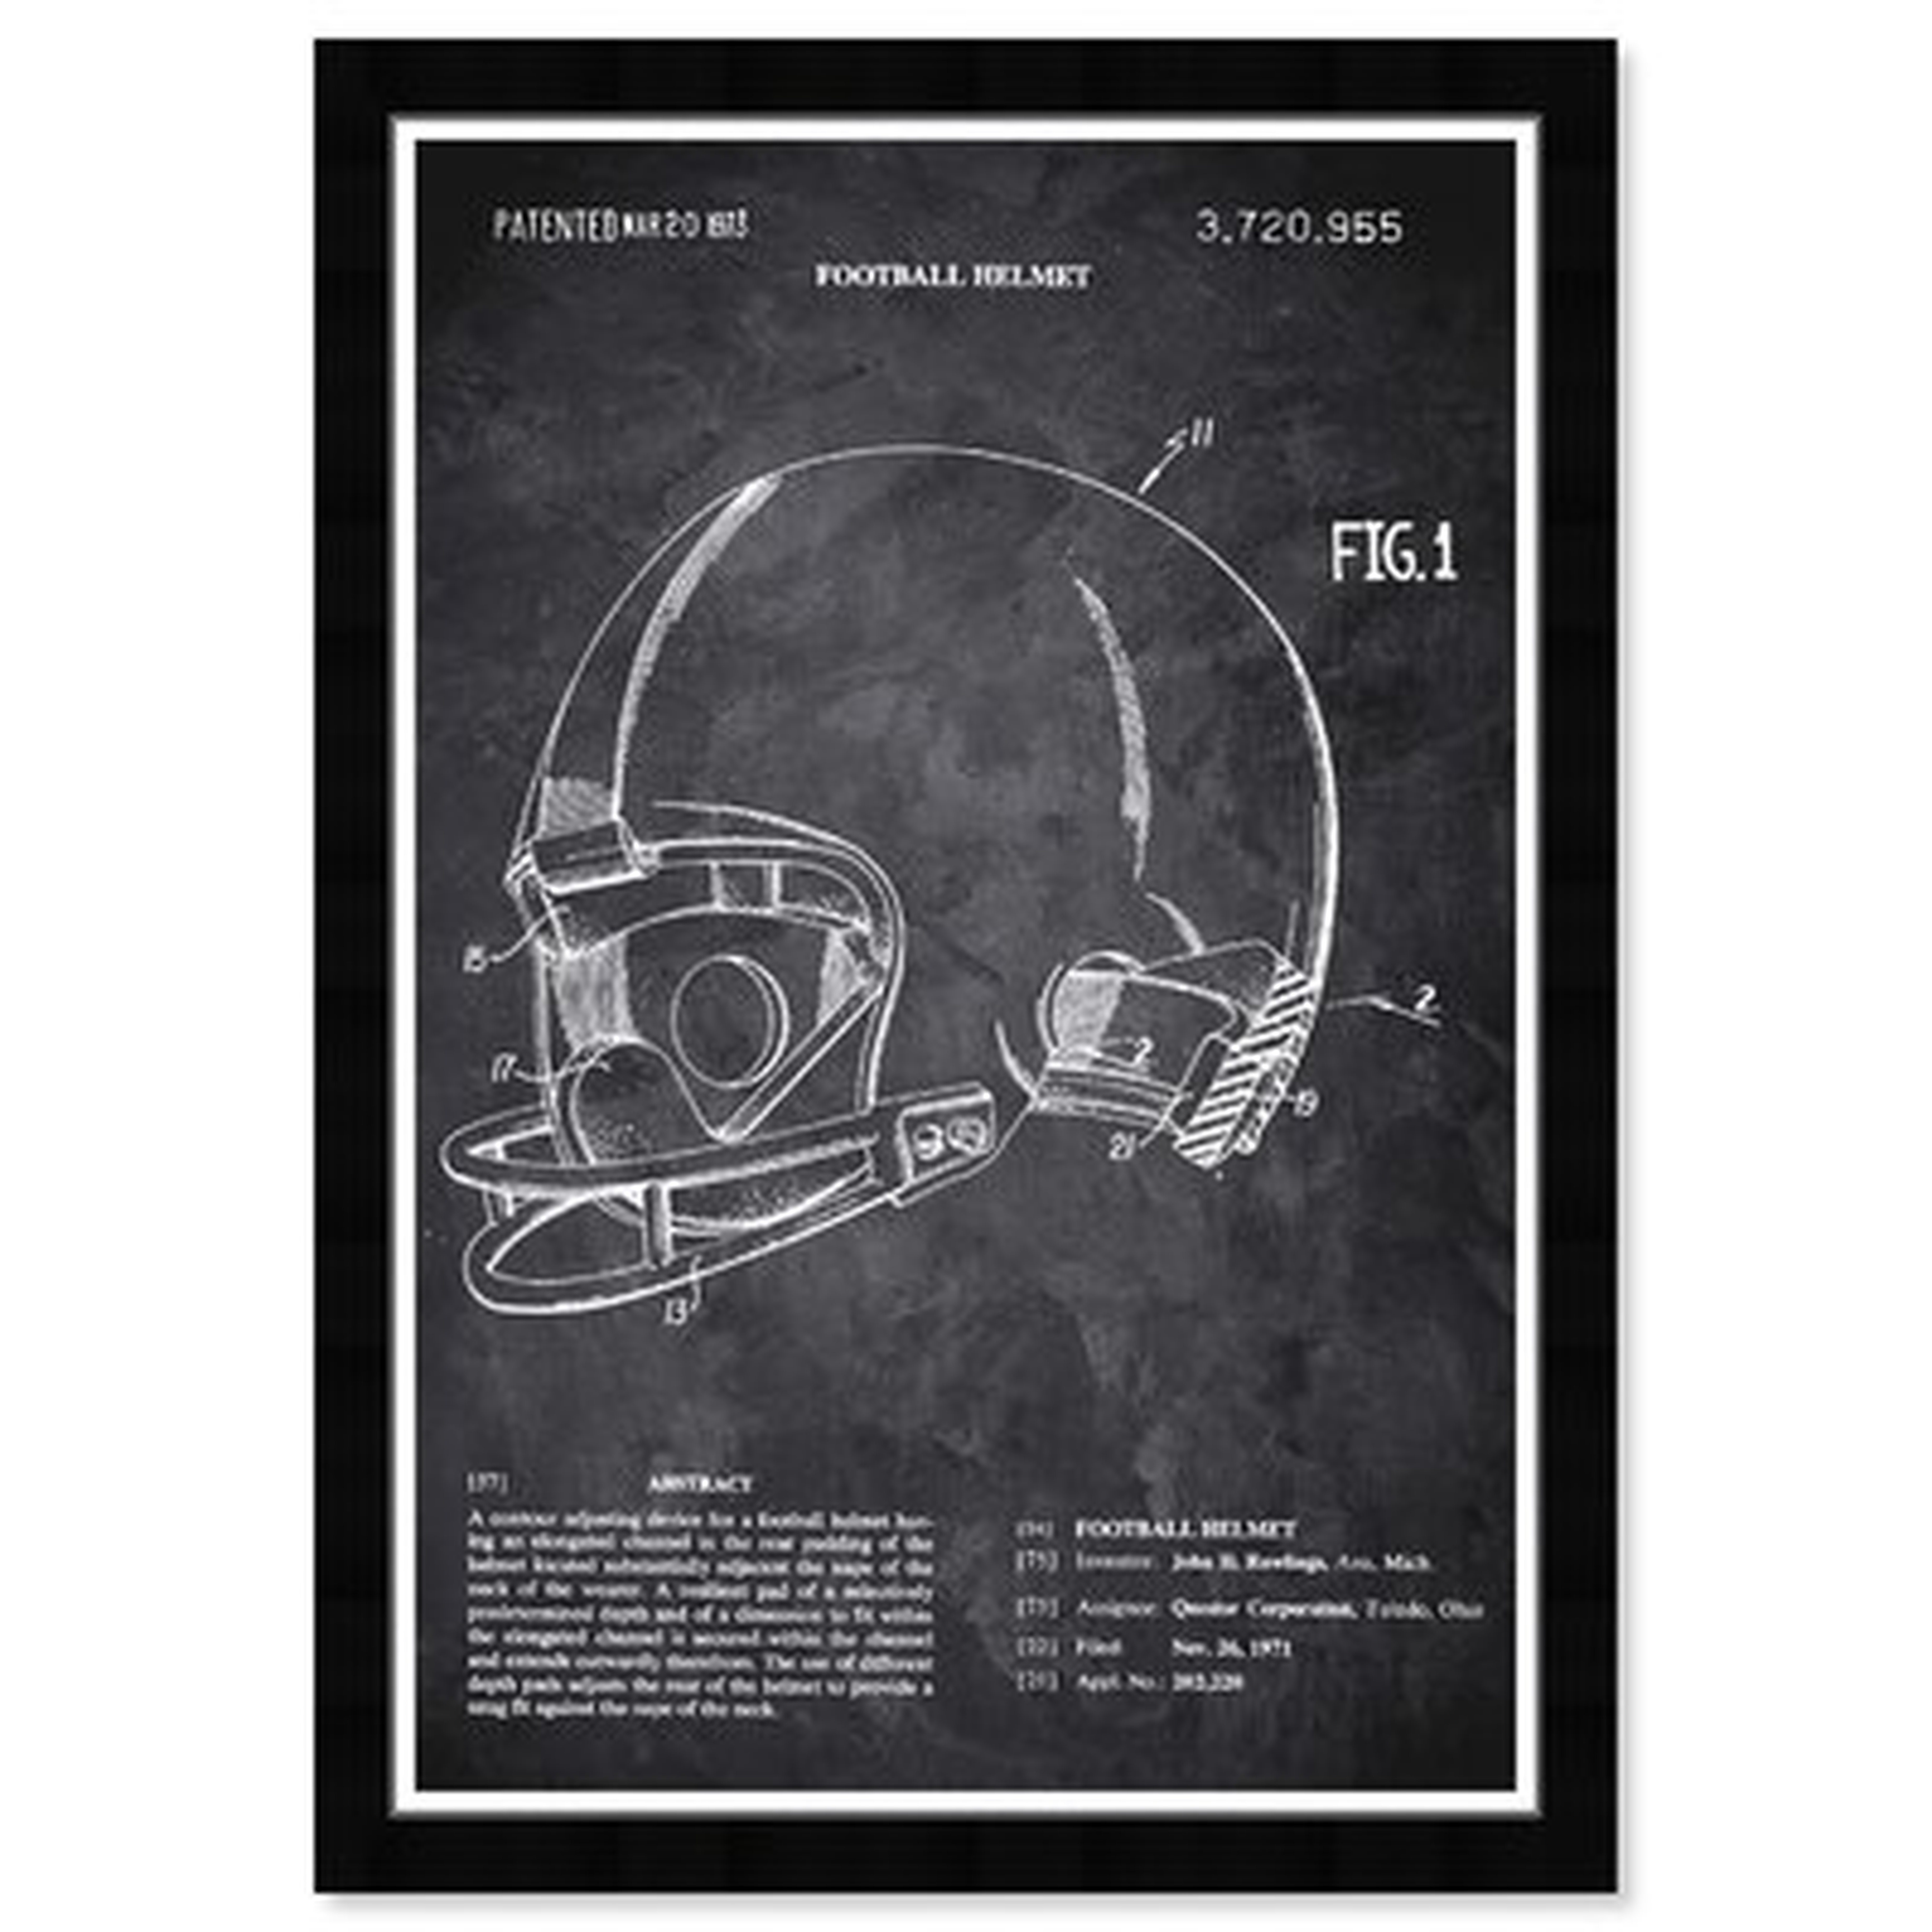 Football Helmet 1973 Chalkboard - Picture Frame Graphic Art Print on Paper - Wayfair